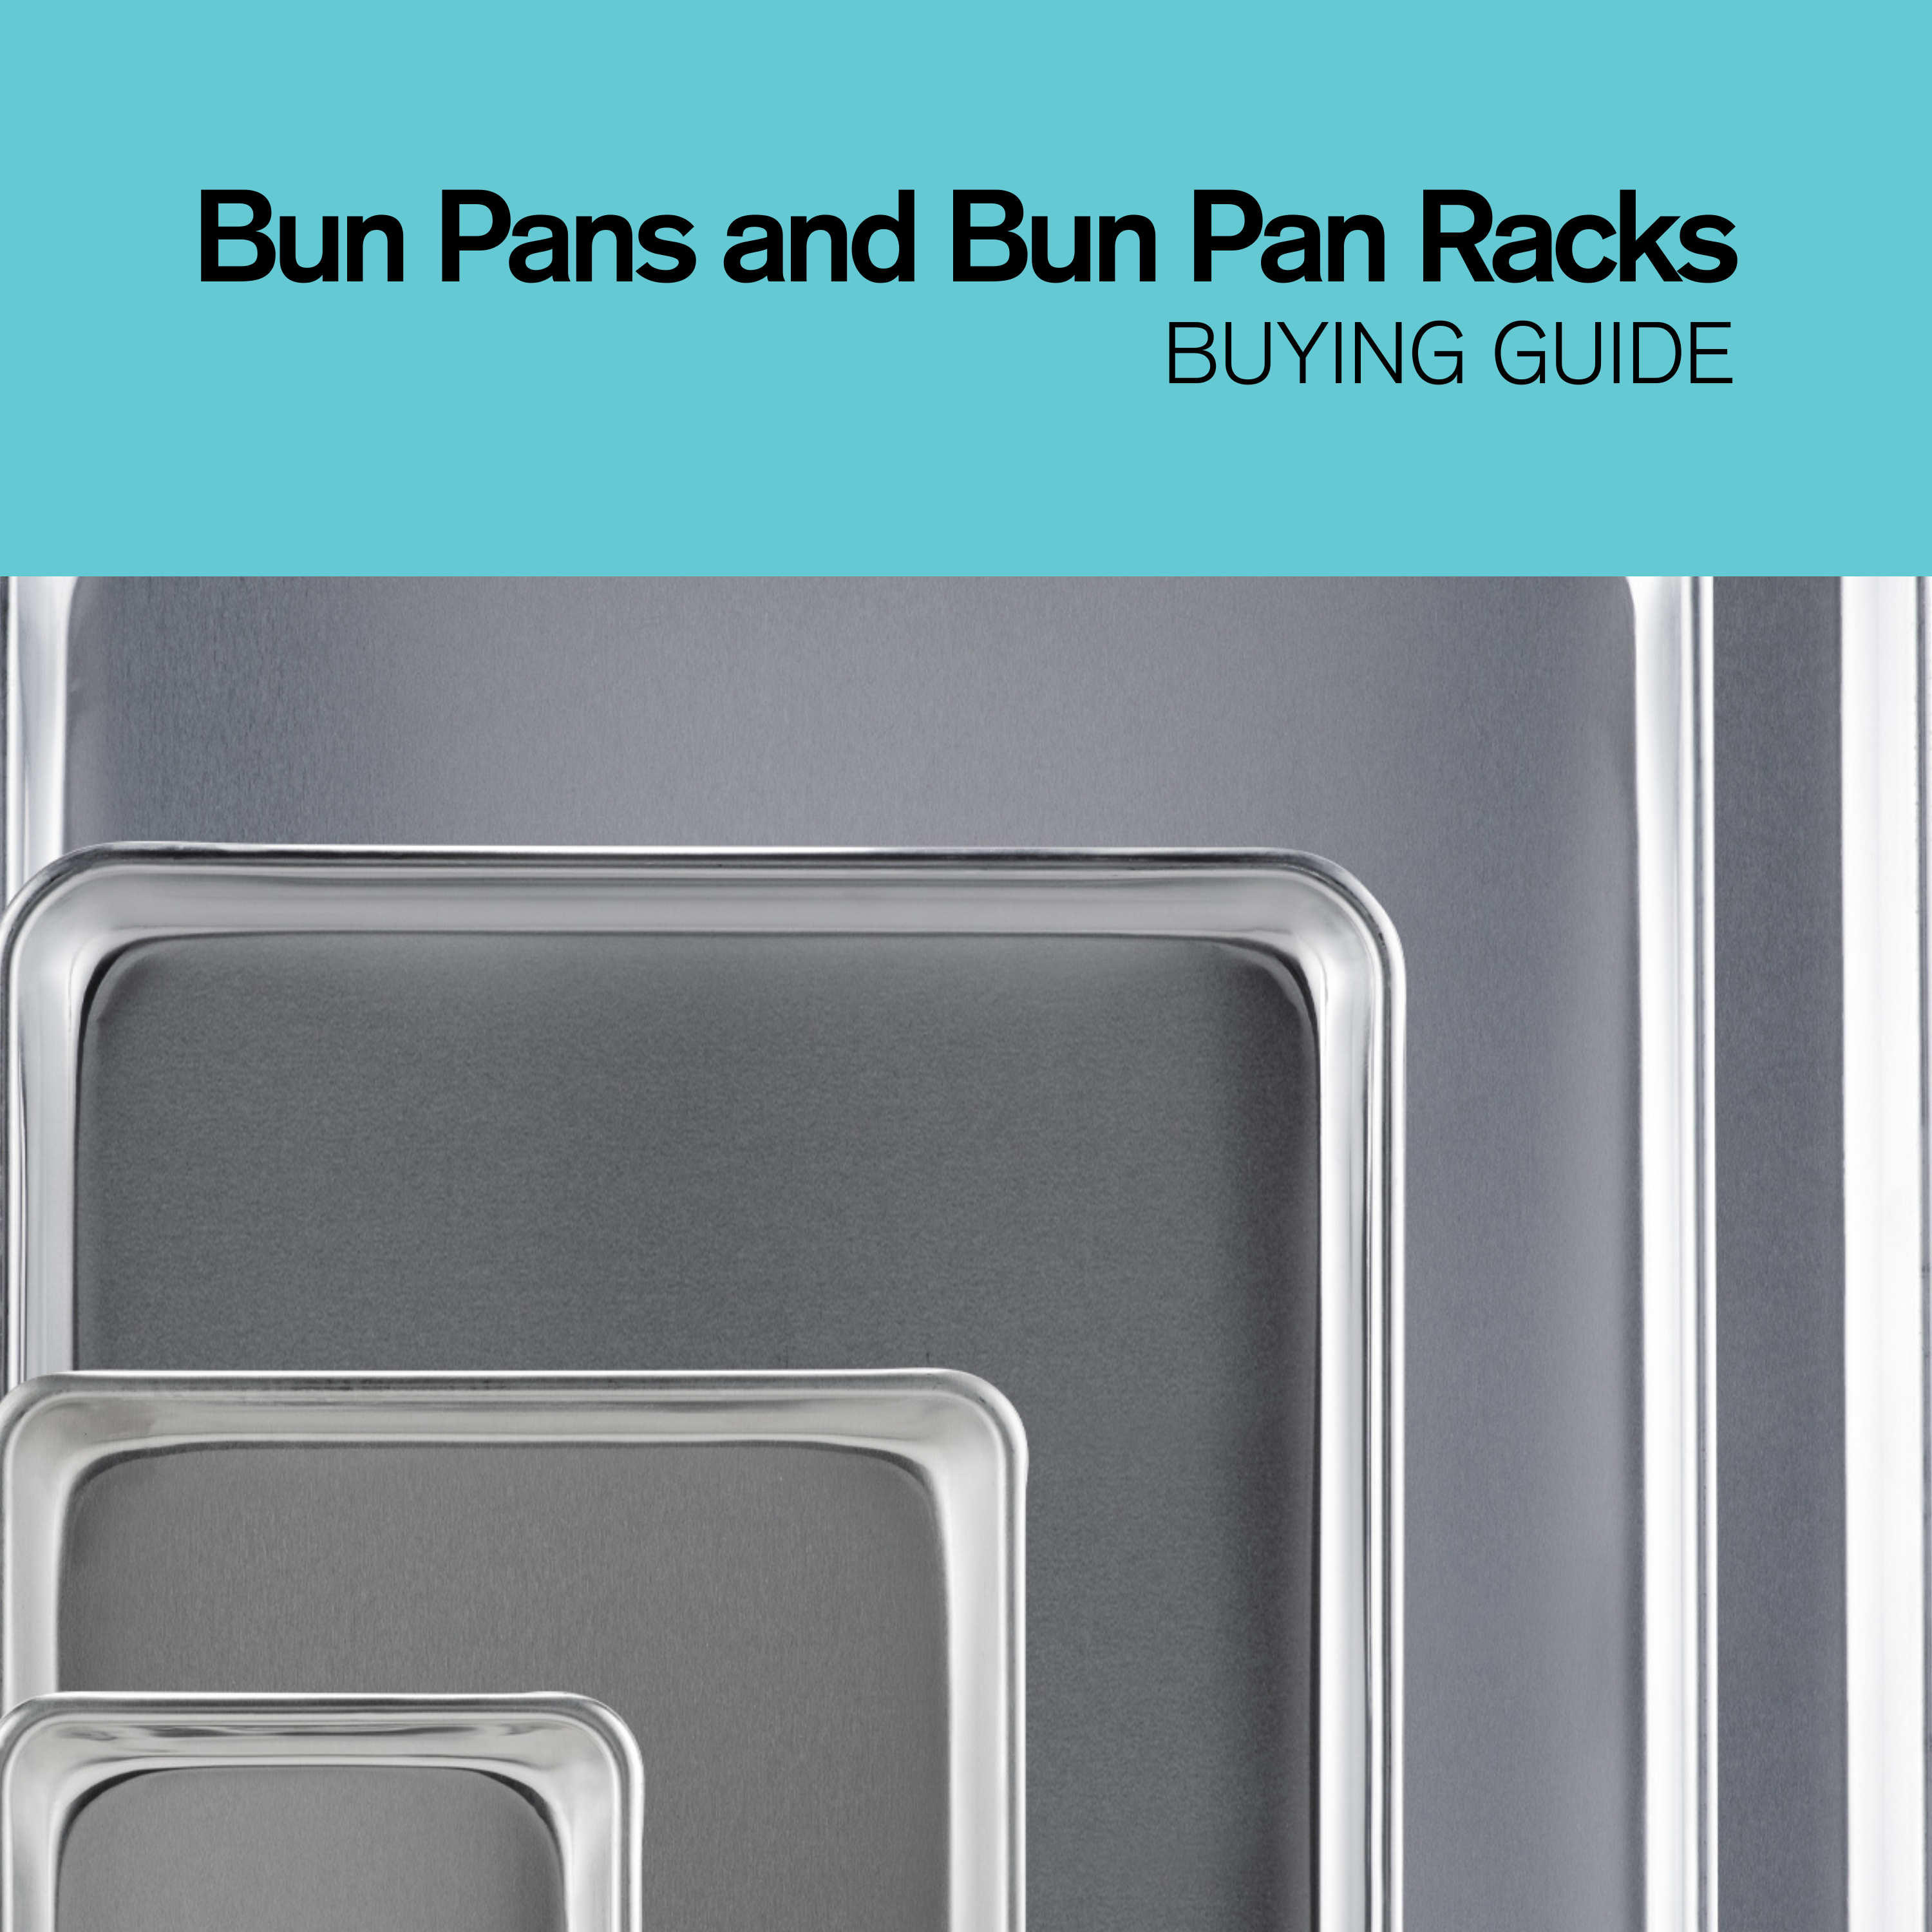 Double Bun Pan Rack Covers: Disposable